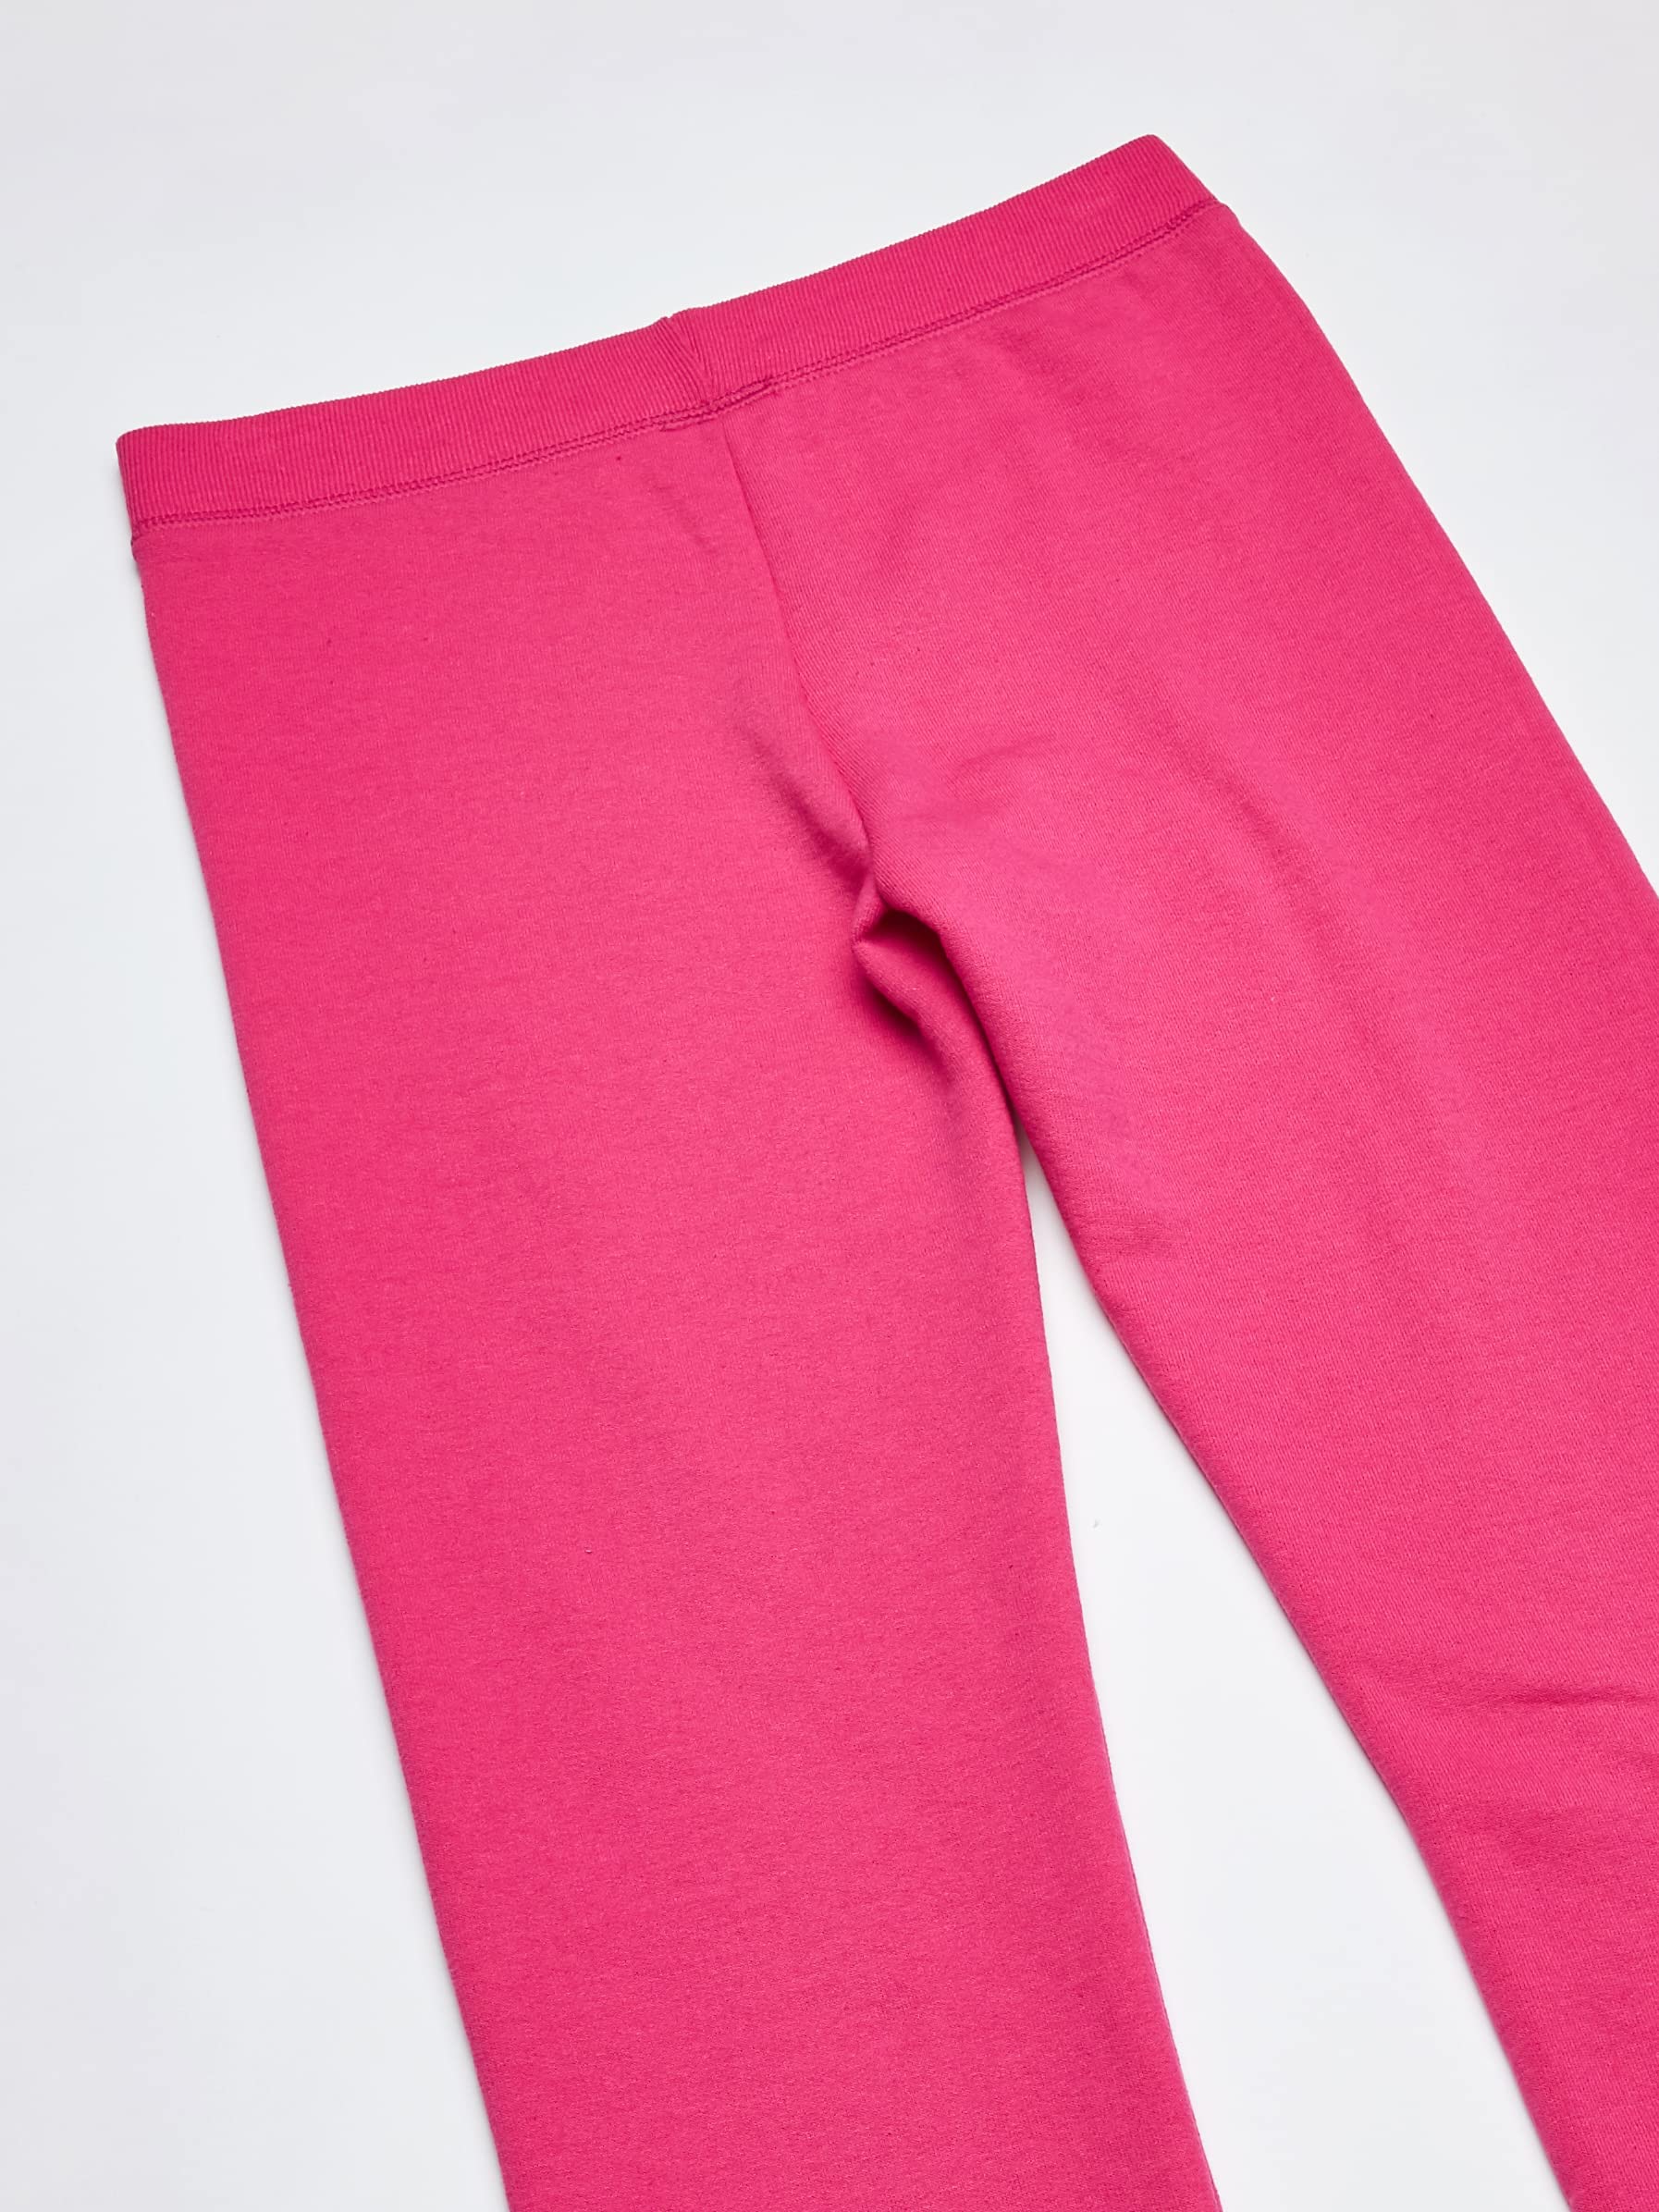 Hanes Girls' Big ComfortSoft EcoSmart Open Bottom Leg Sweatpants